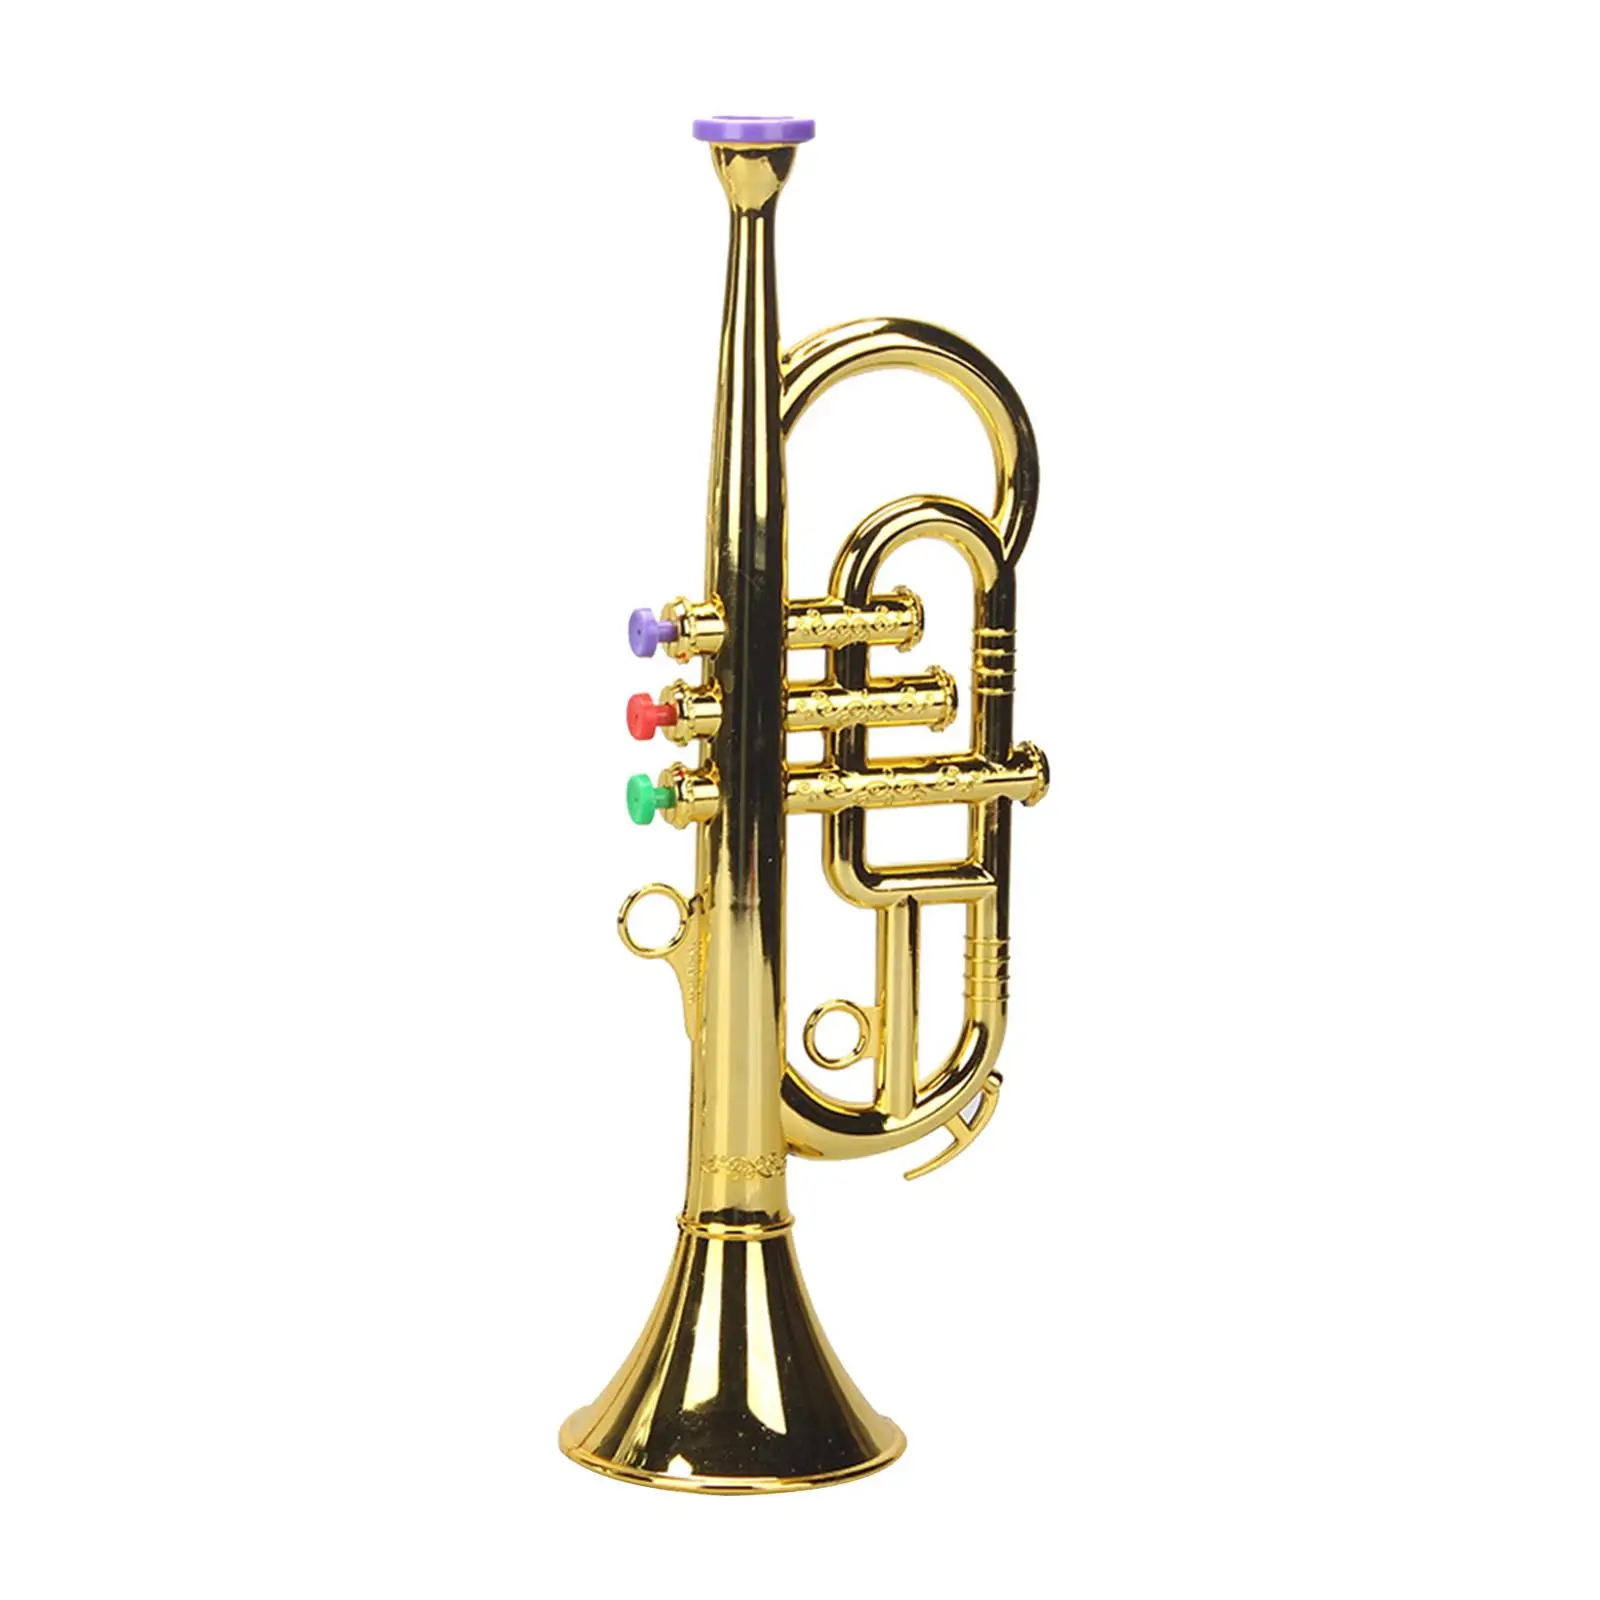 Musical ABS Trumpet Wind Instruments for Party Preschool Children